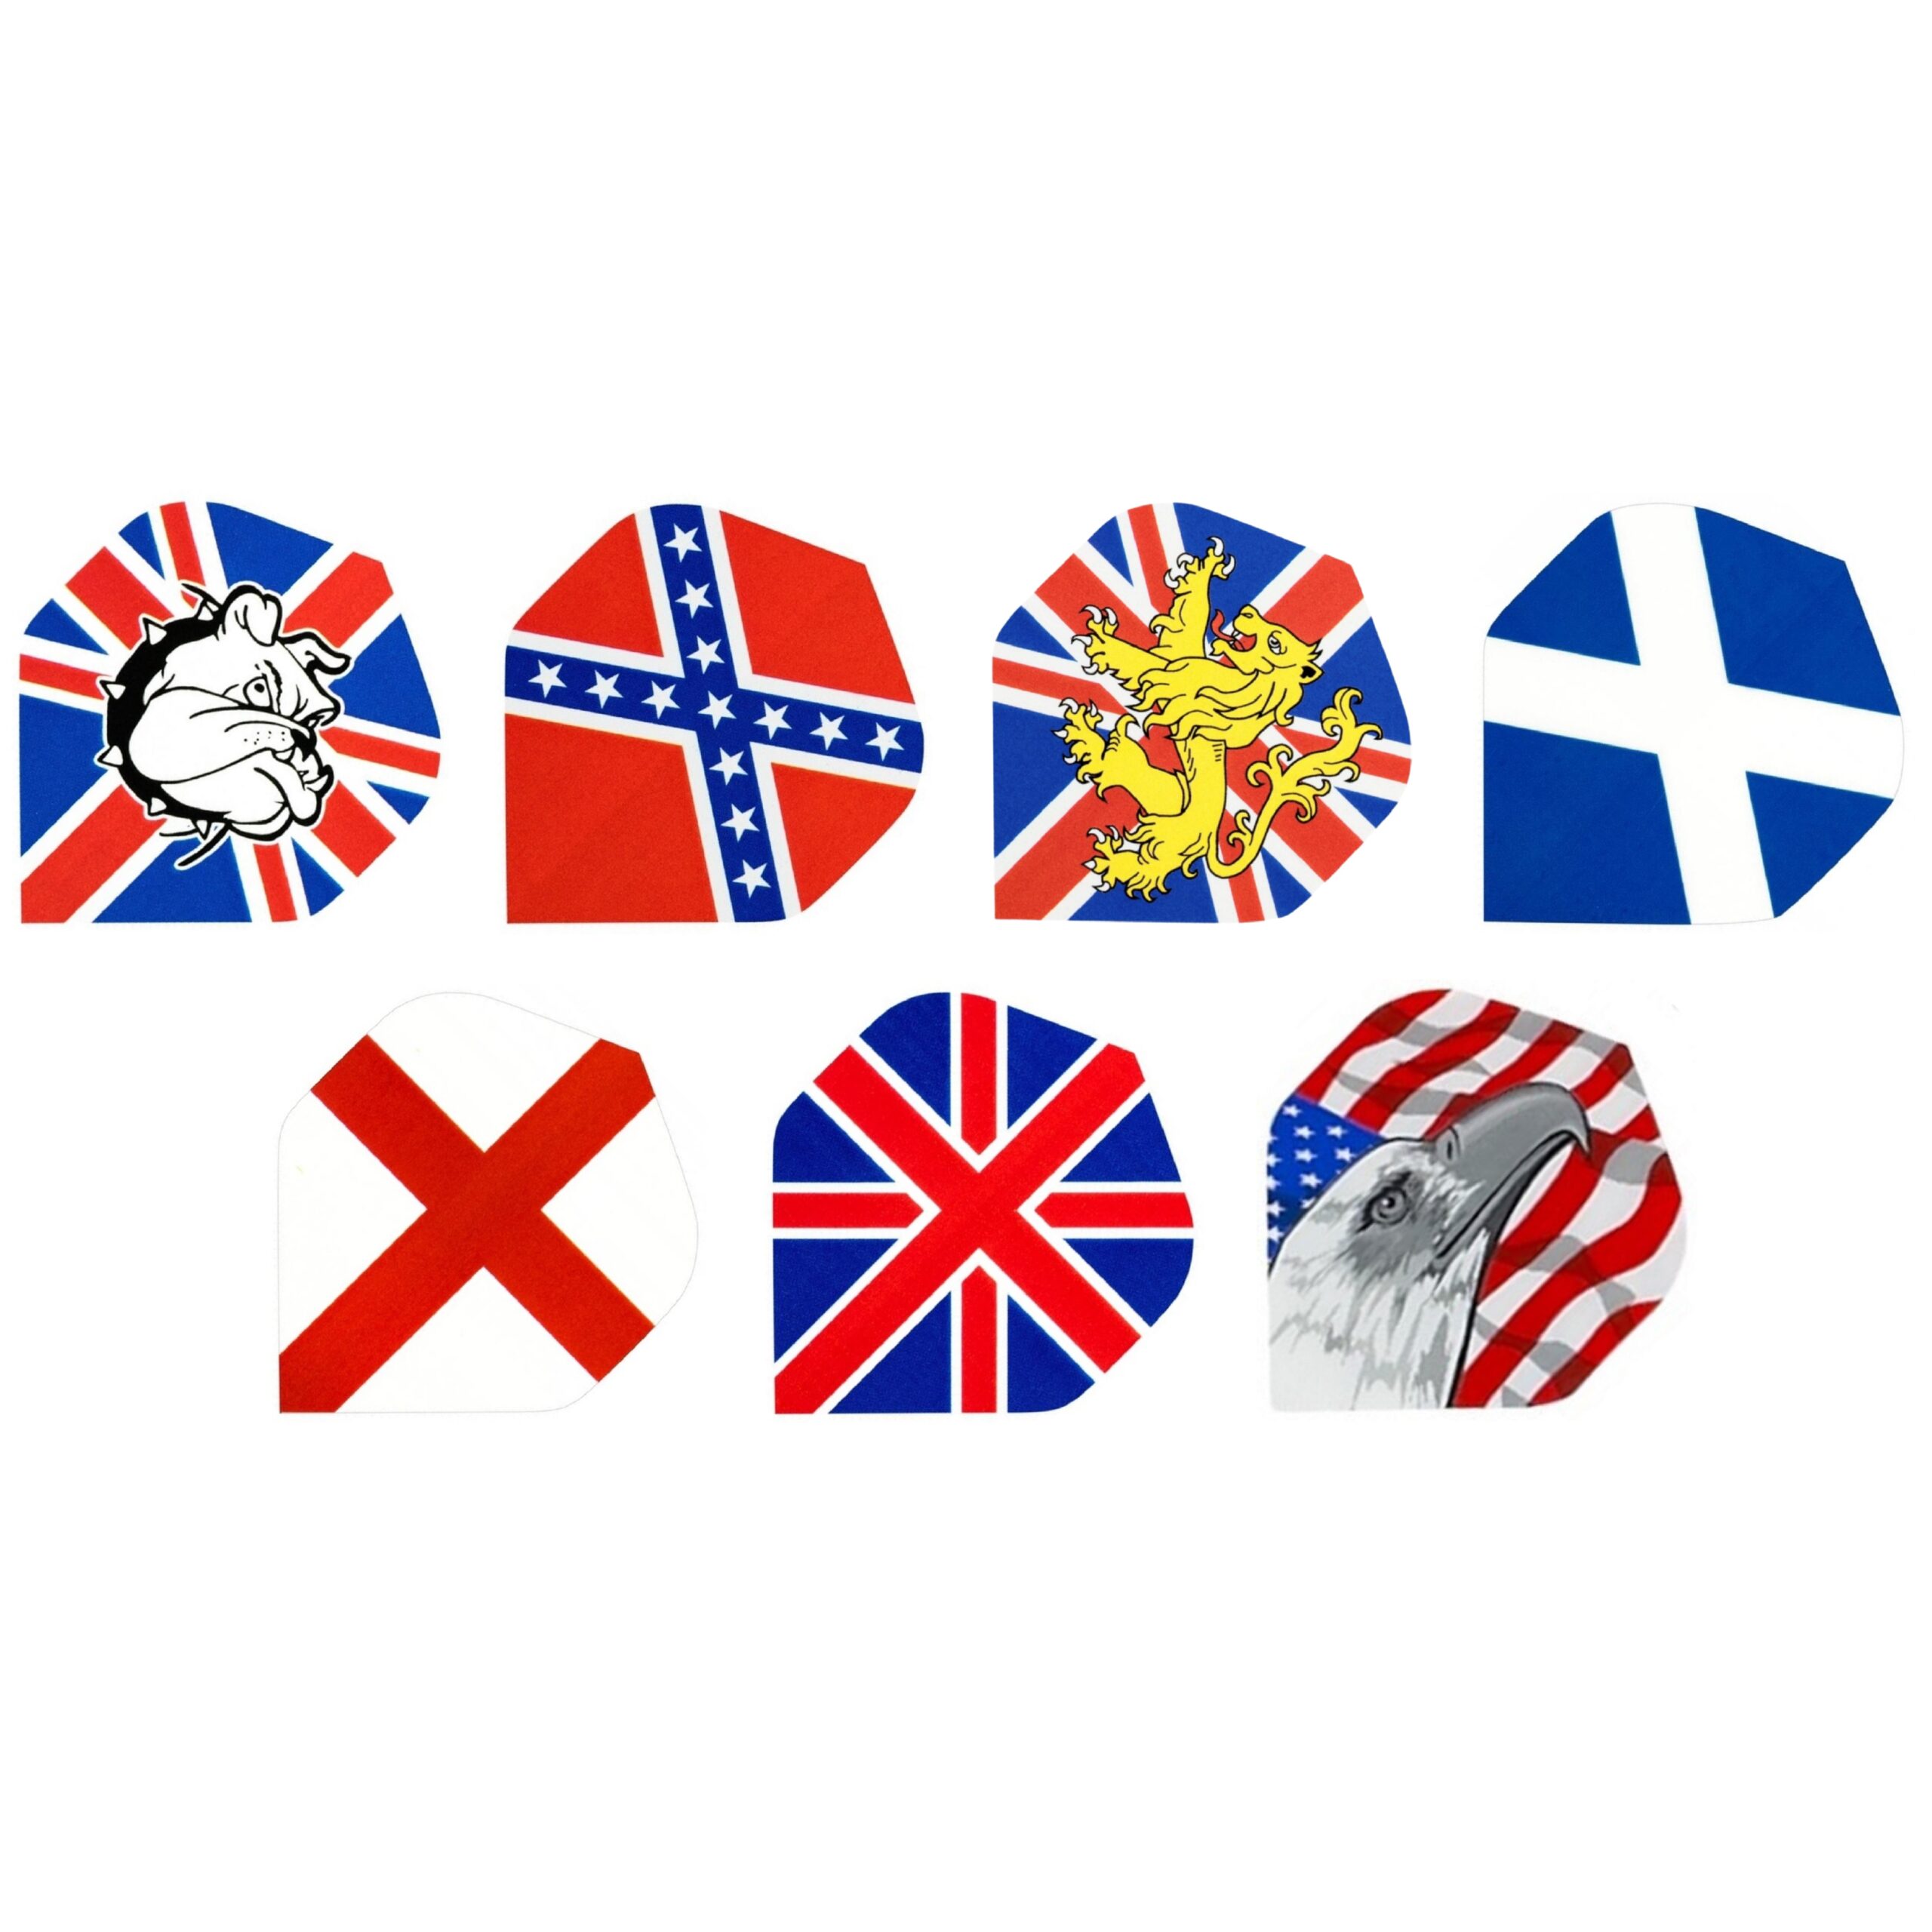 FORMULA METRONIC Darts FLIGHTS SET Weird National Cartoon Emblem 1 set of 3 